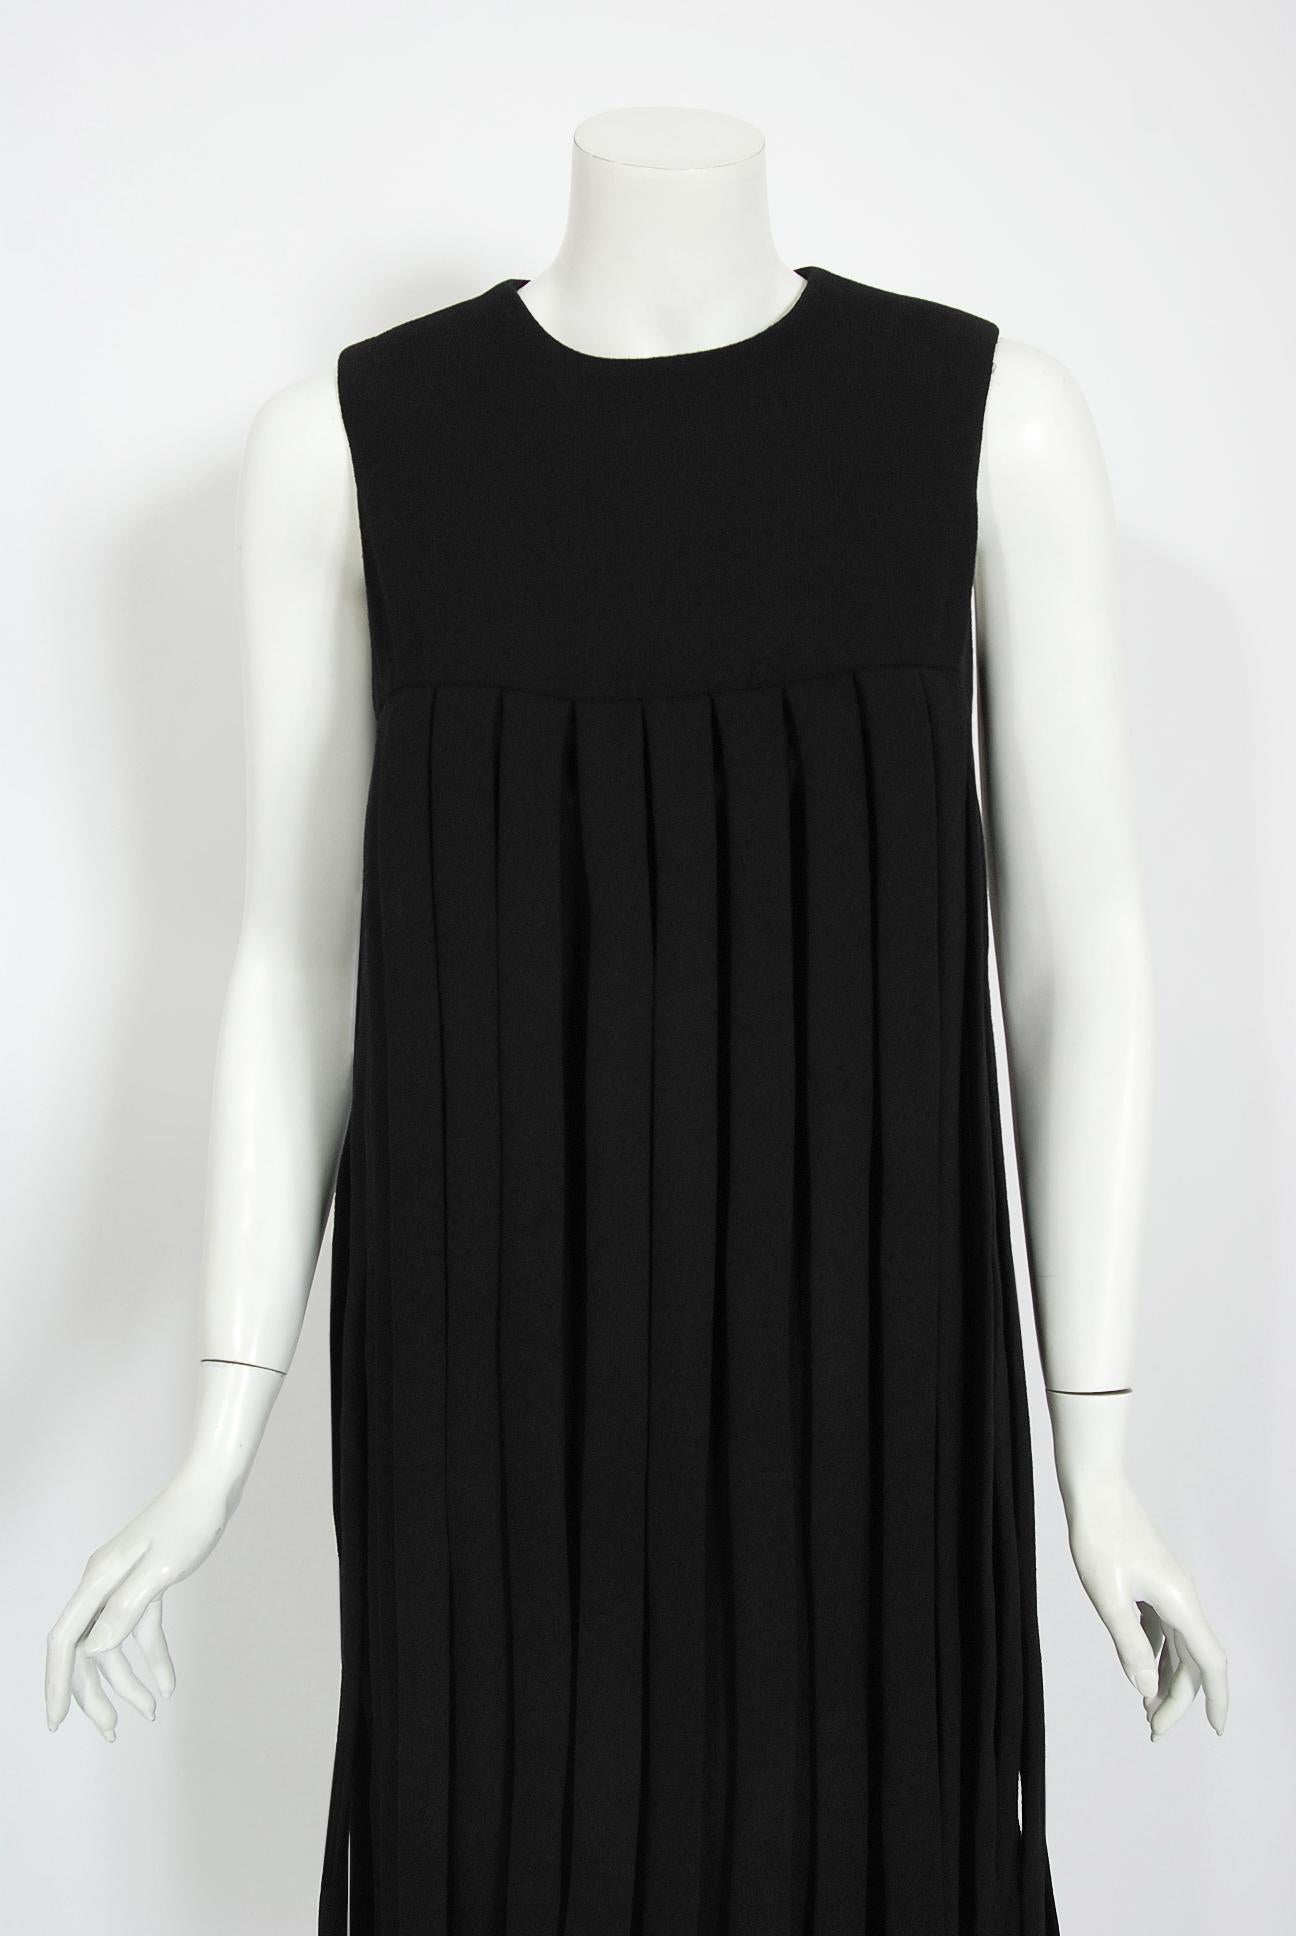 Vintage 1967 Pierre Cardin Documented Black Wool Space-Age Mod Carwash Dress 2